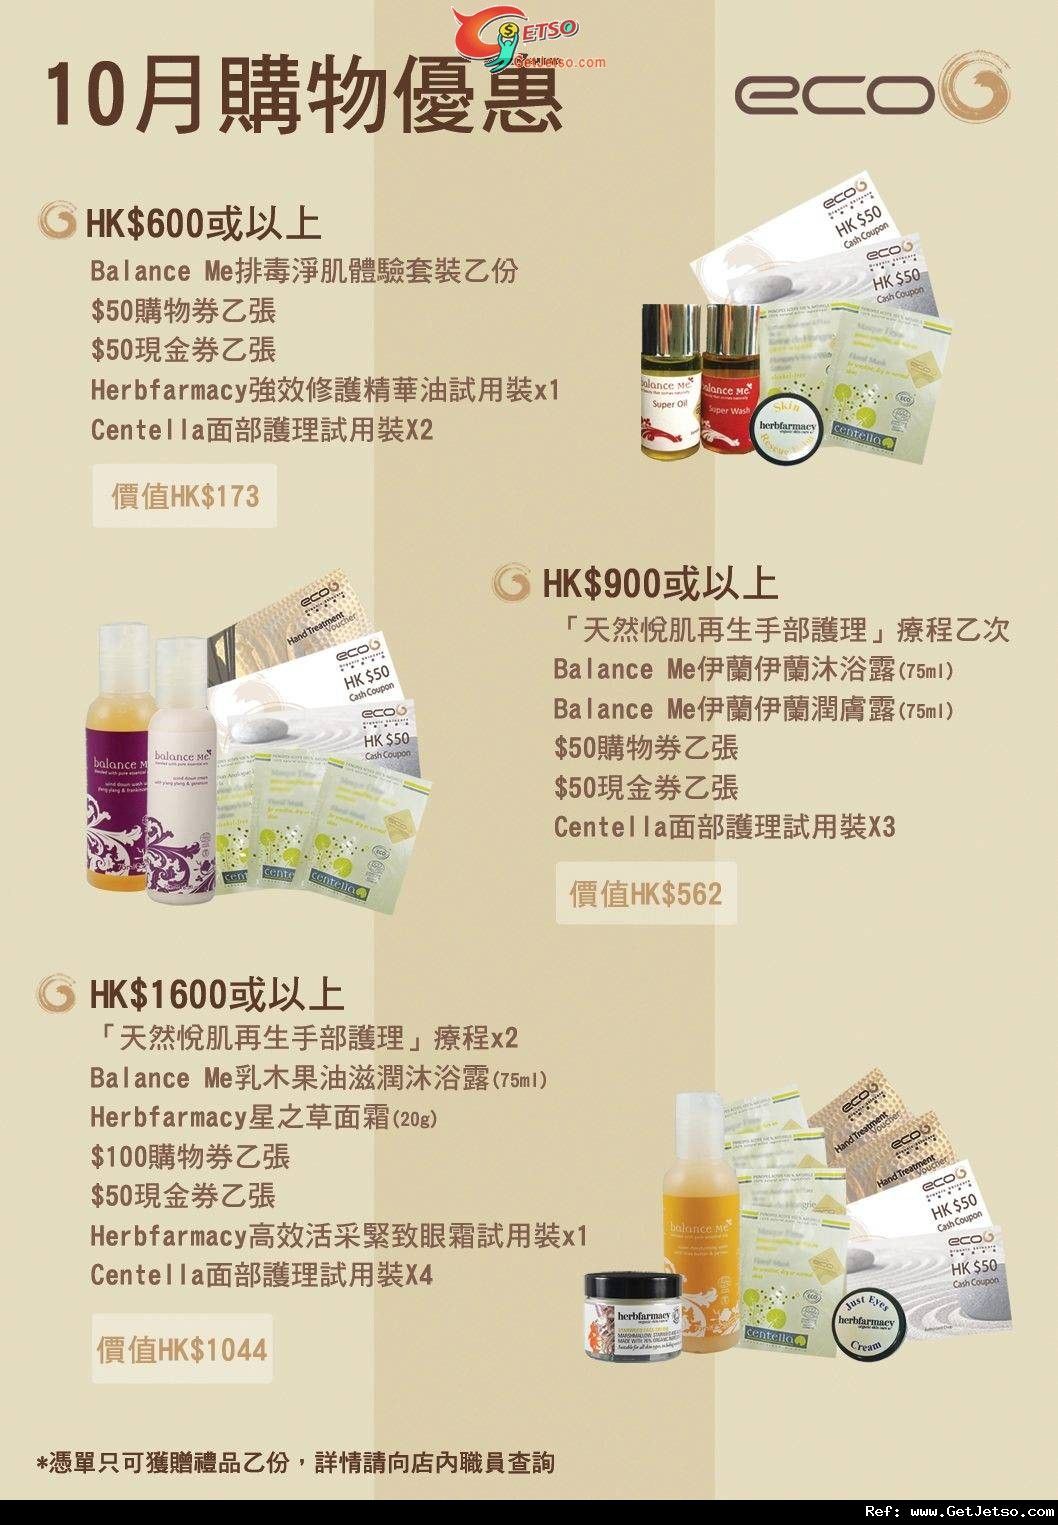 EcoG 有機護膚品10月份購物優惠(至11年10月31日)圖片1